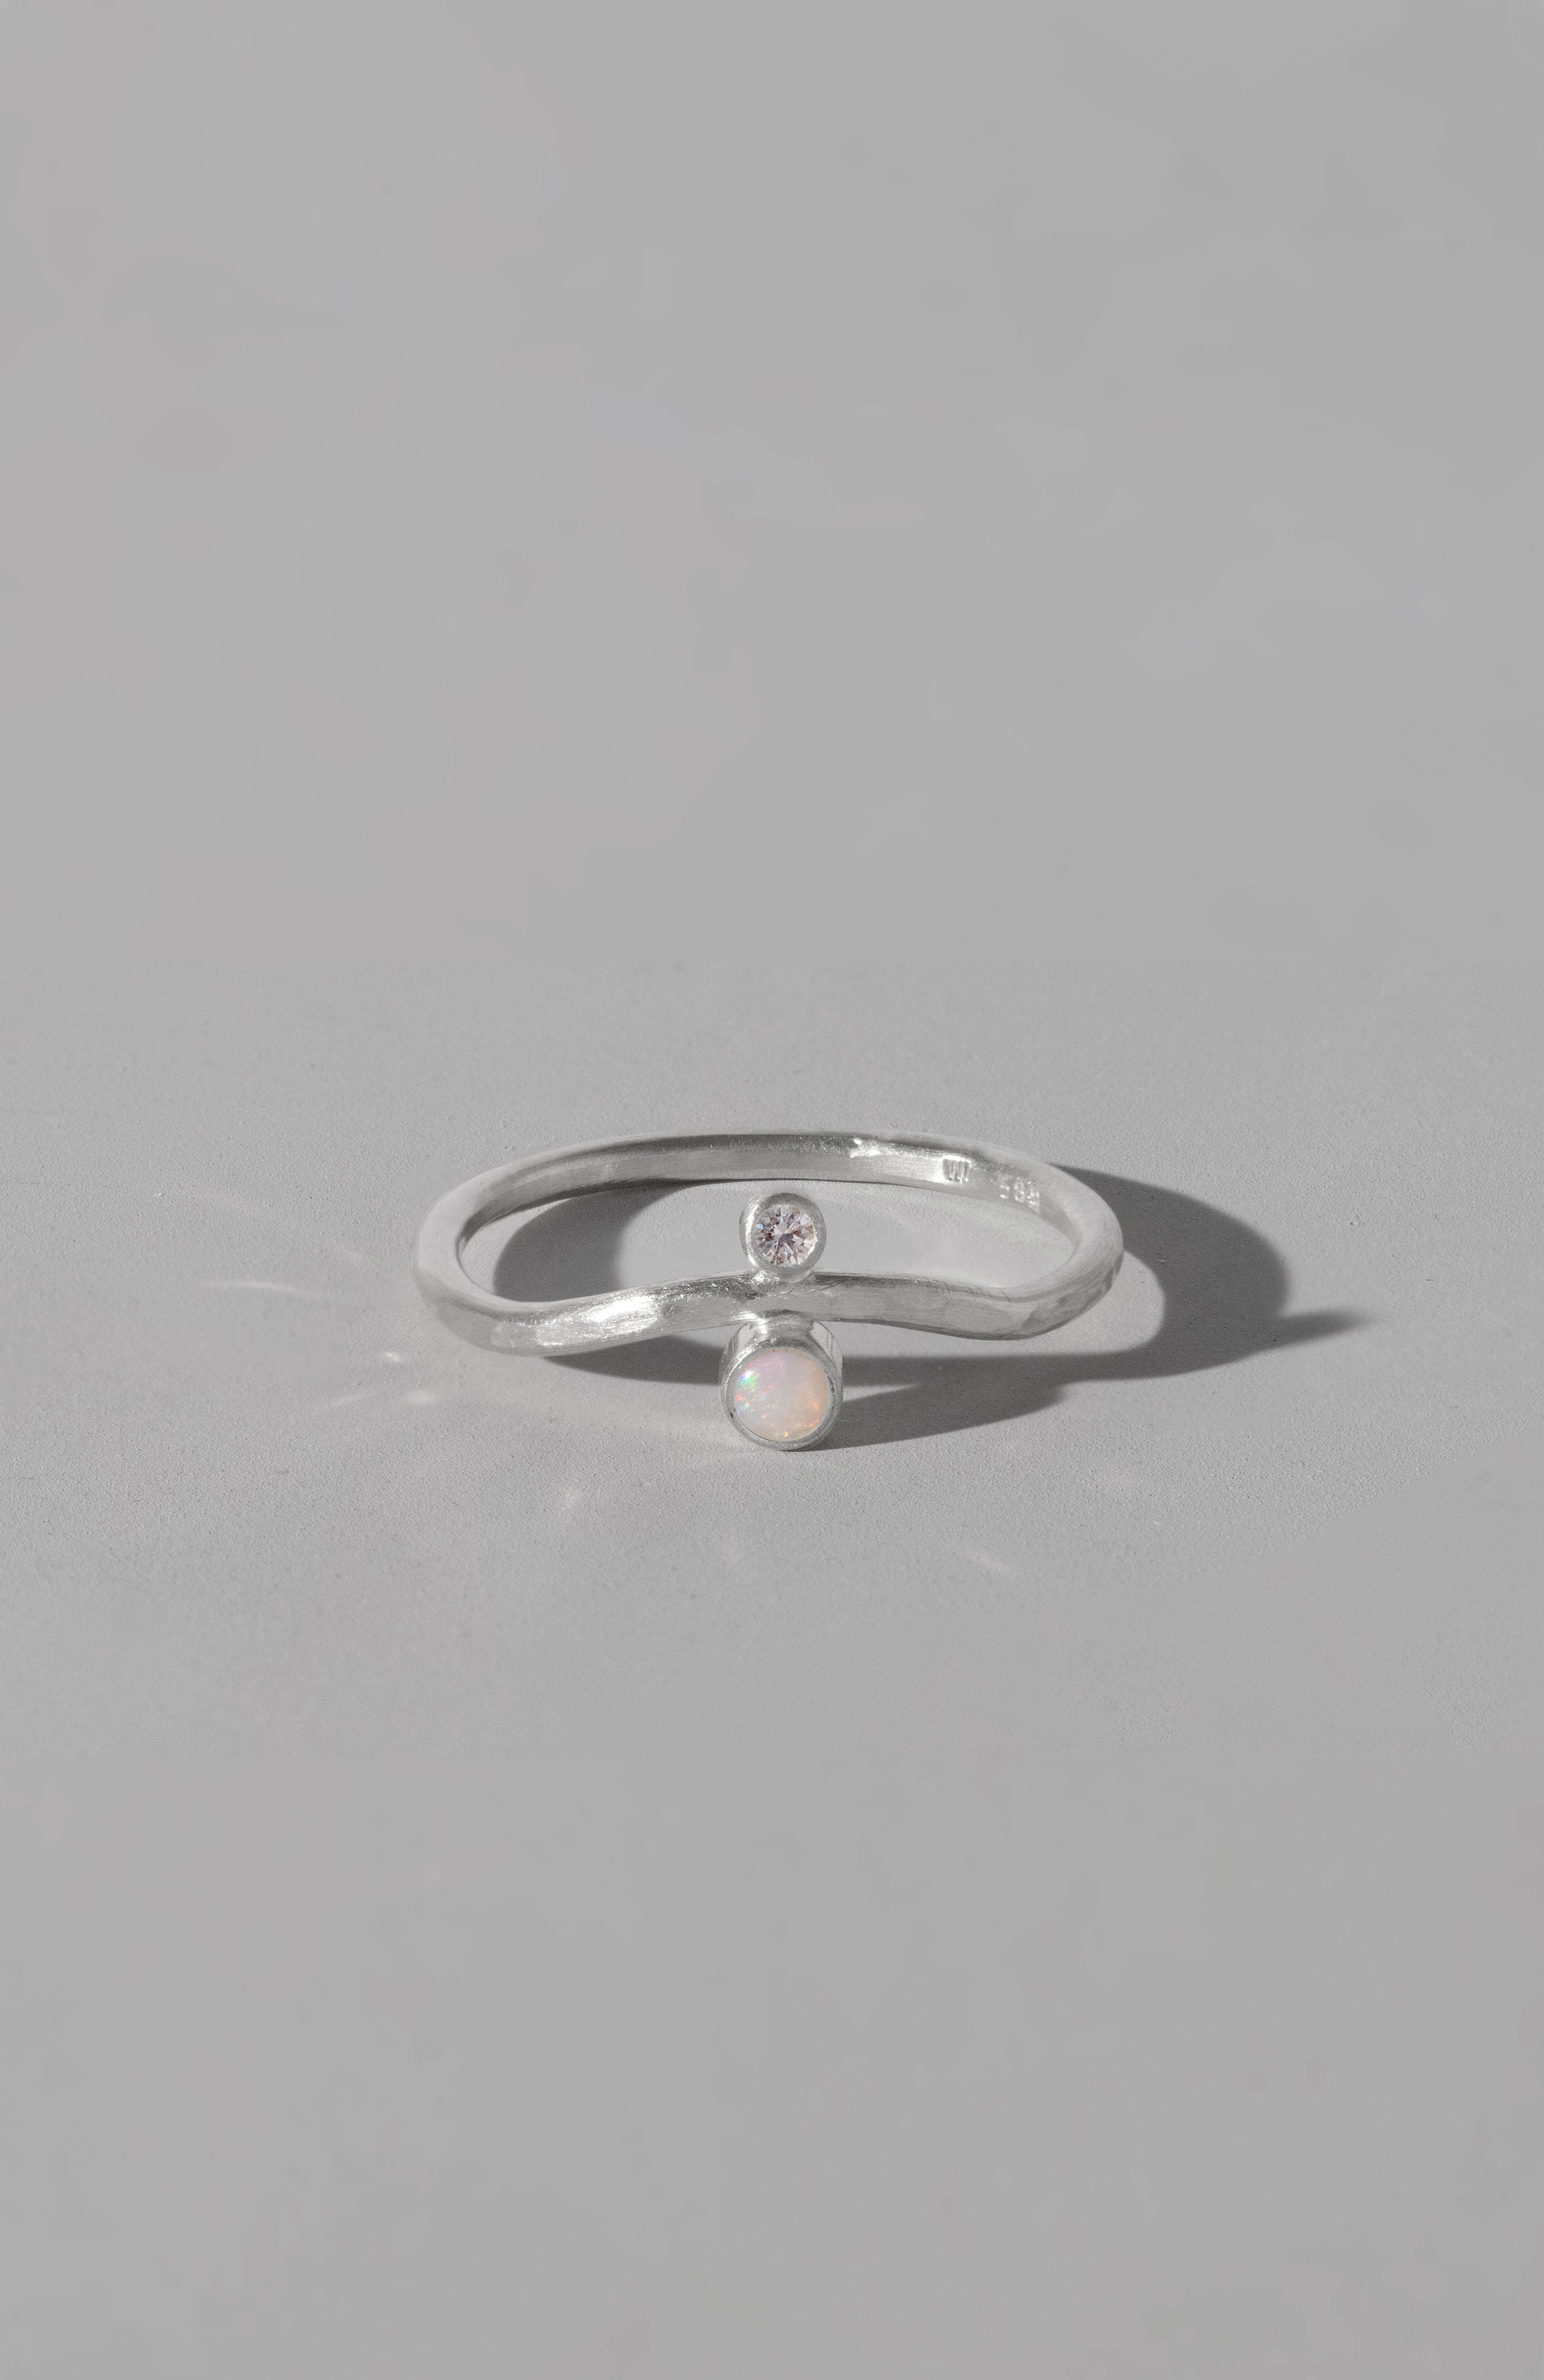 Diamond Opal Ring